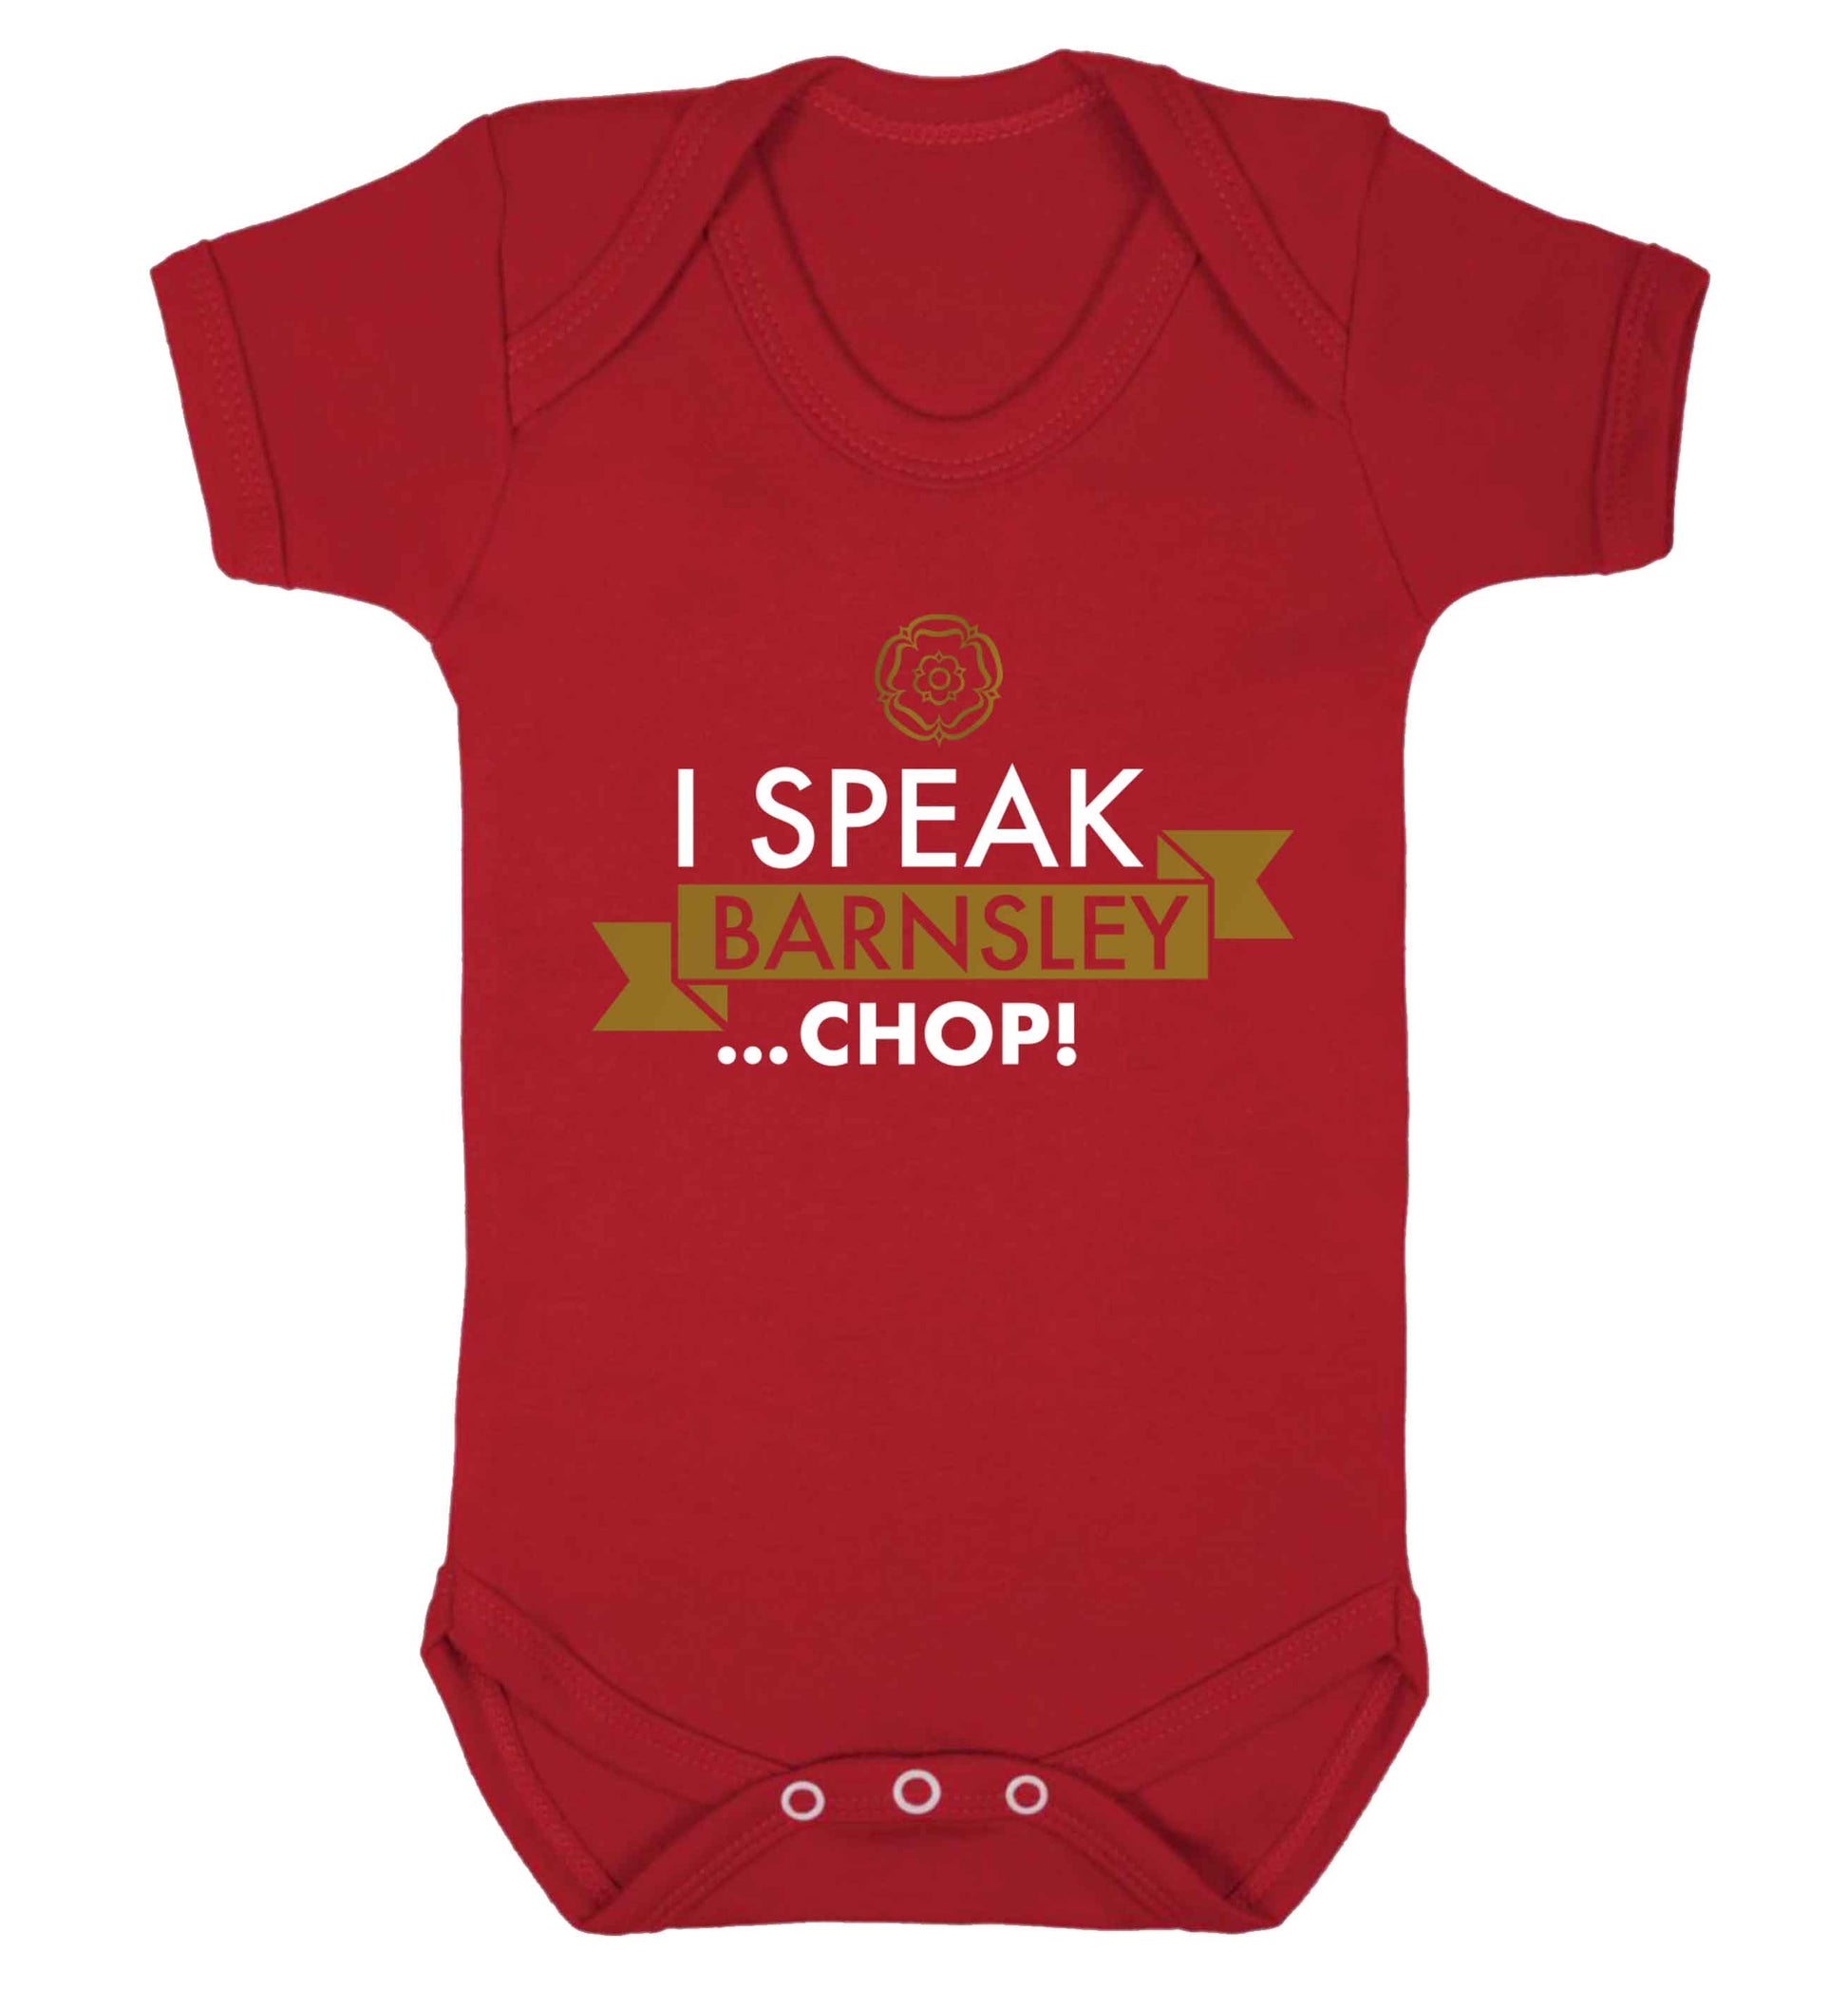 I speak Barnsley...chop! Baby Vest red 18-24 months